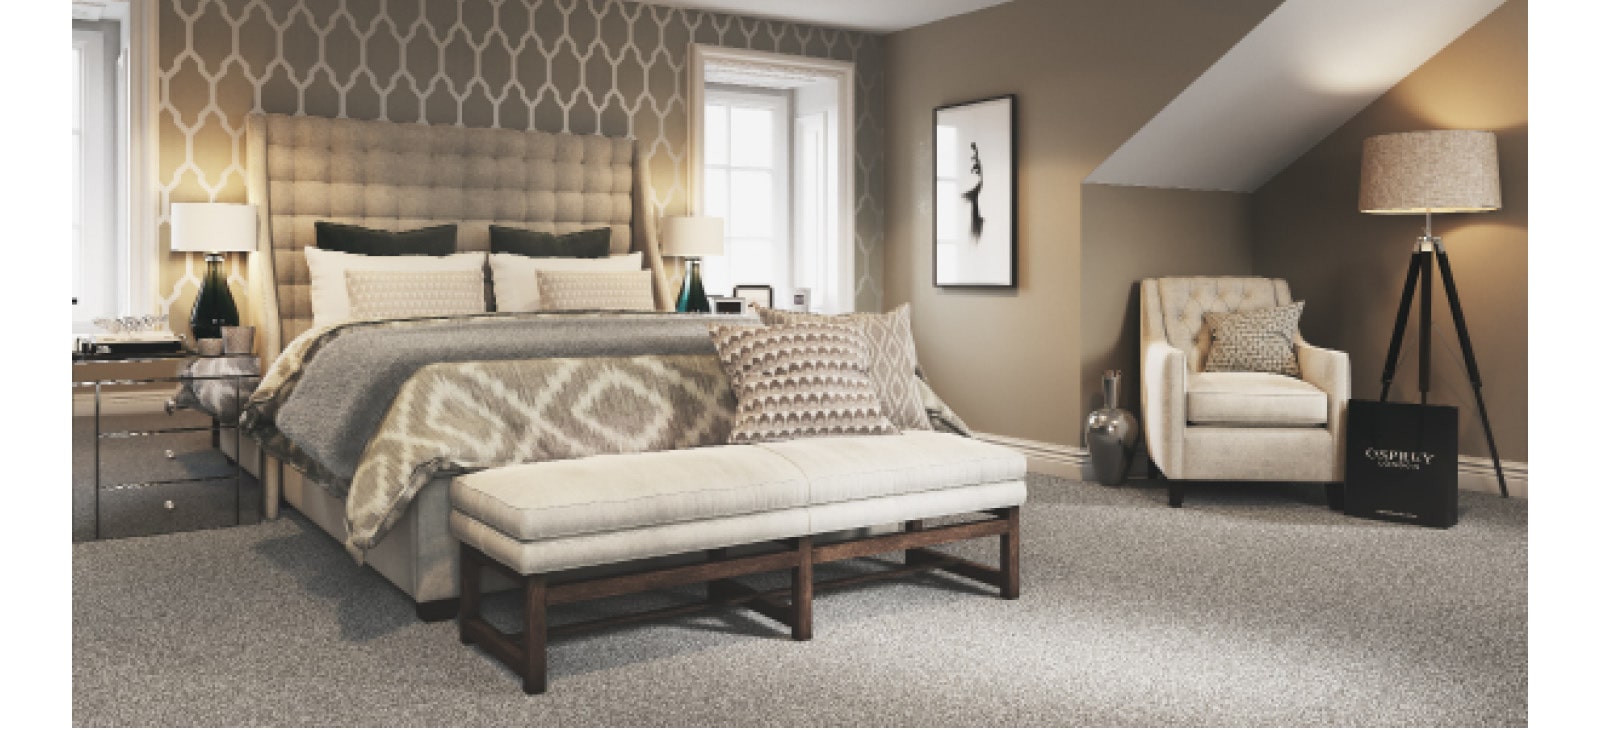 Grey carpet, neutral coloured bedroom